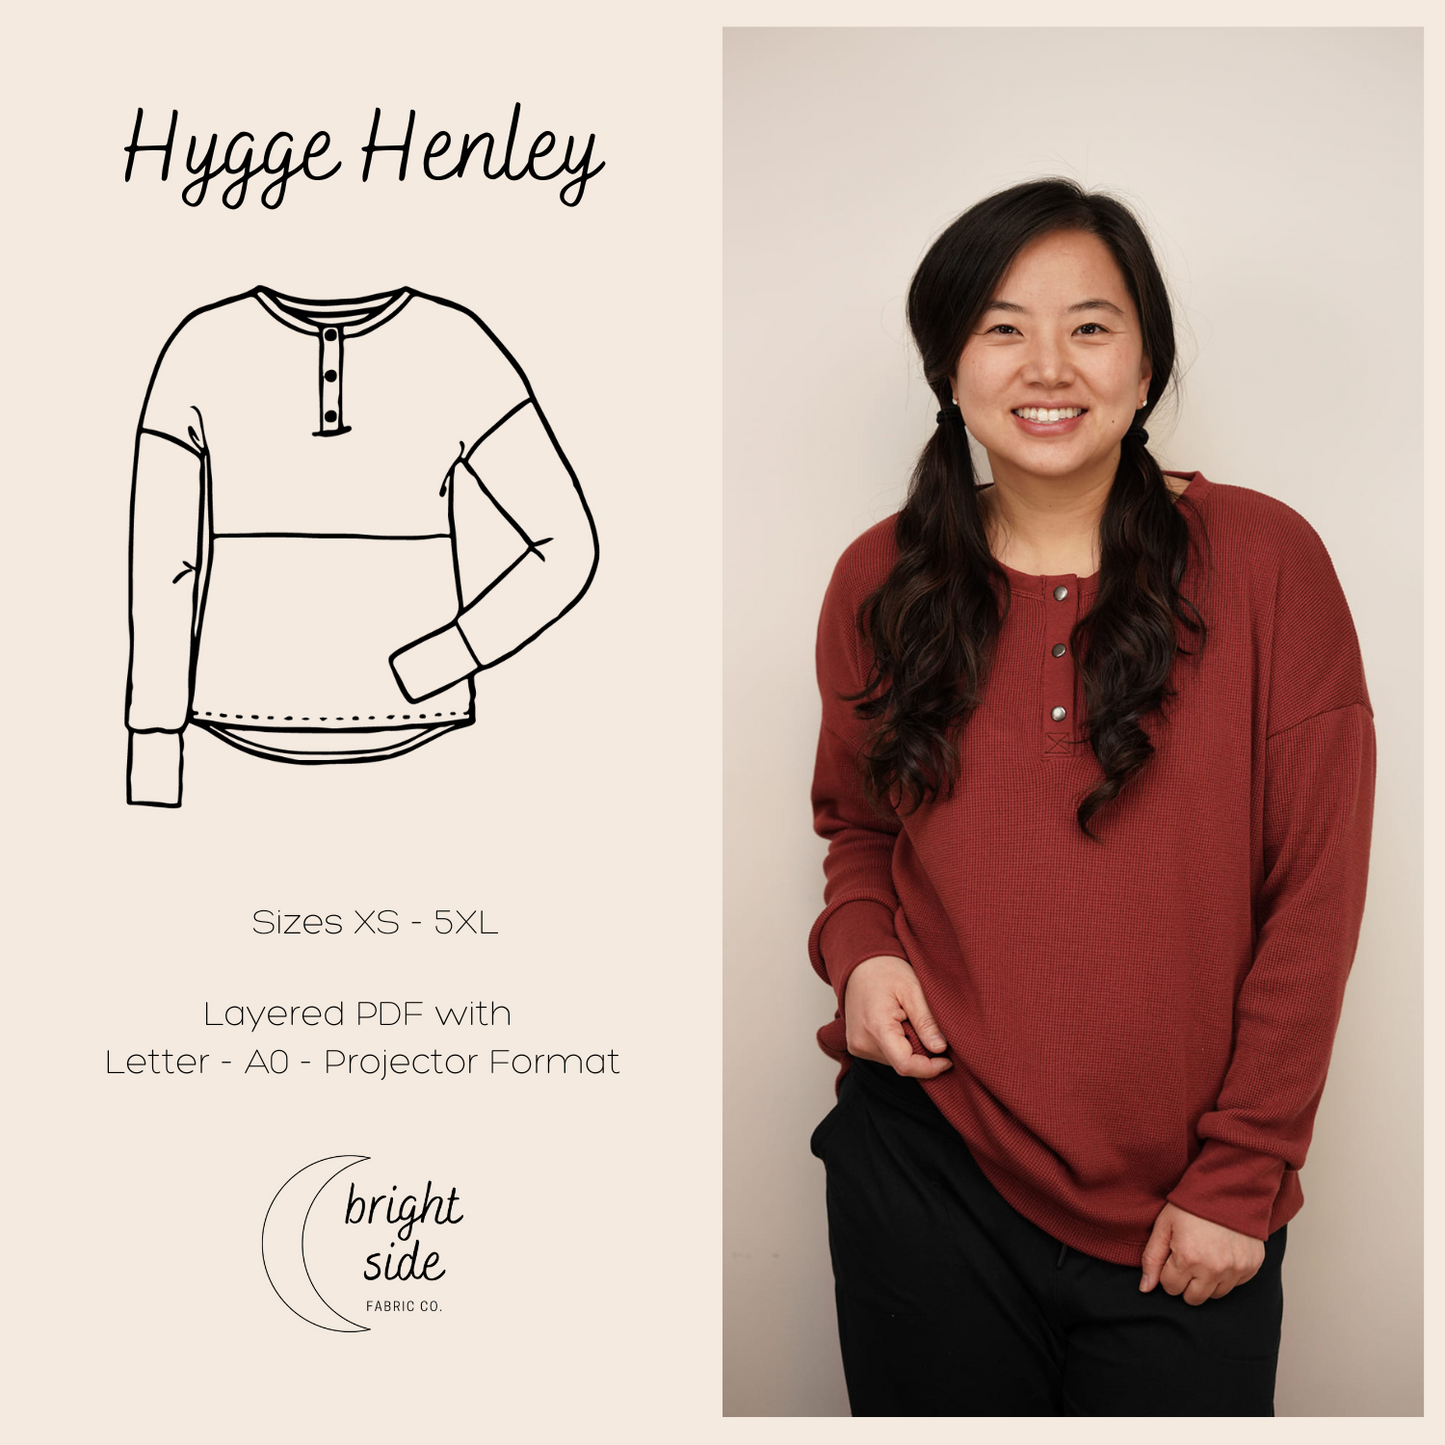 Hygge Henley Sewing Pattern